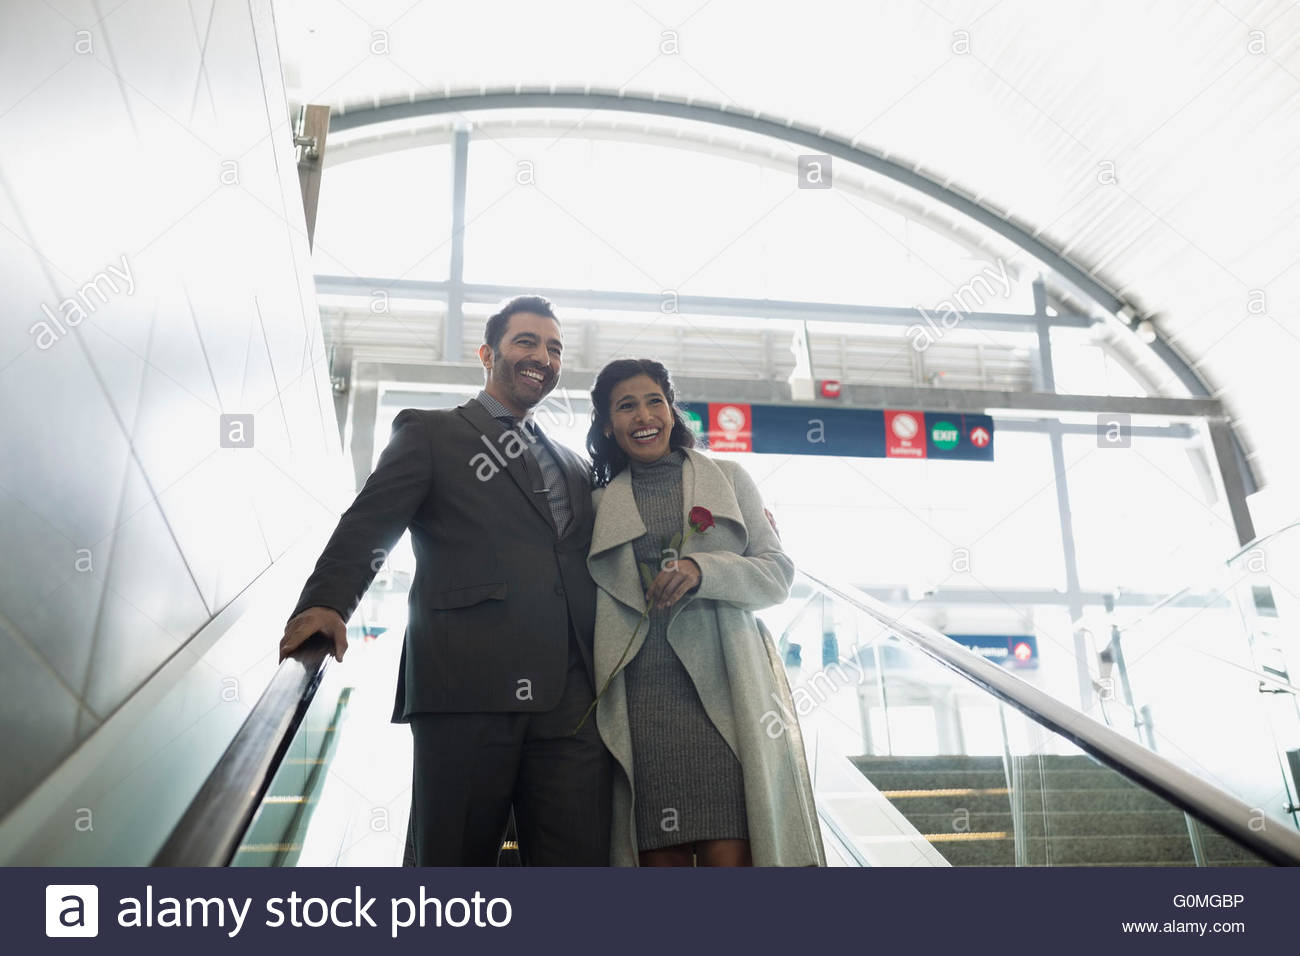 Smiling couple descending escalator at train station Banque D'Images